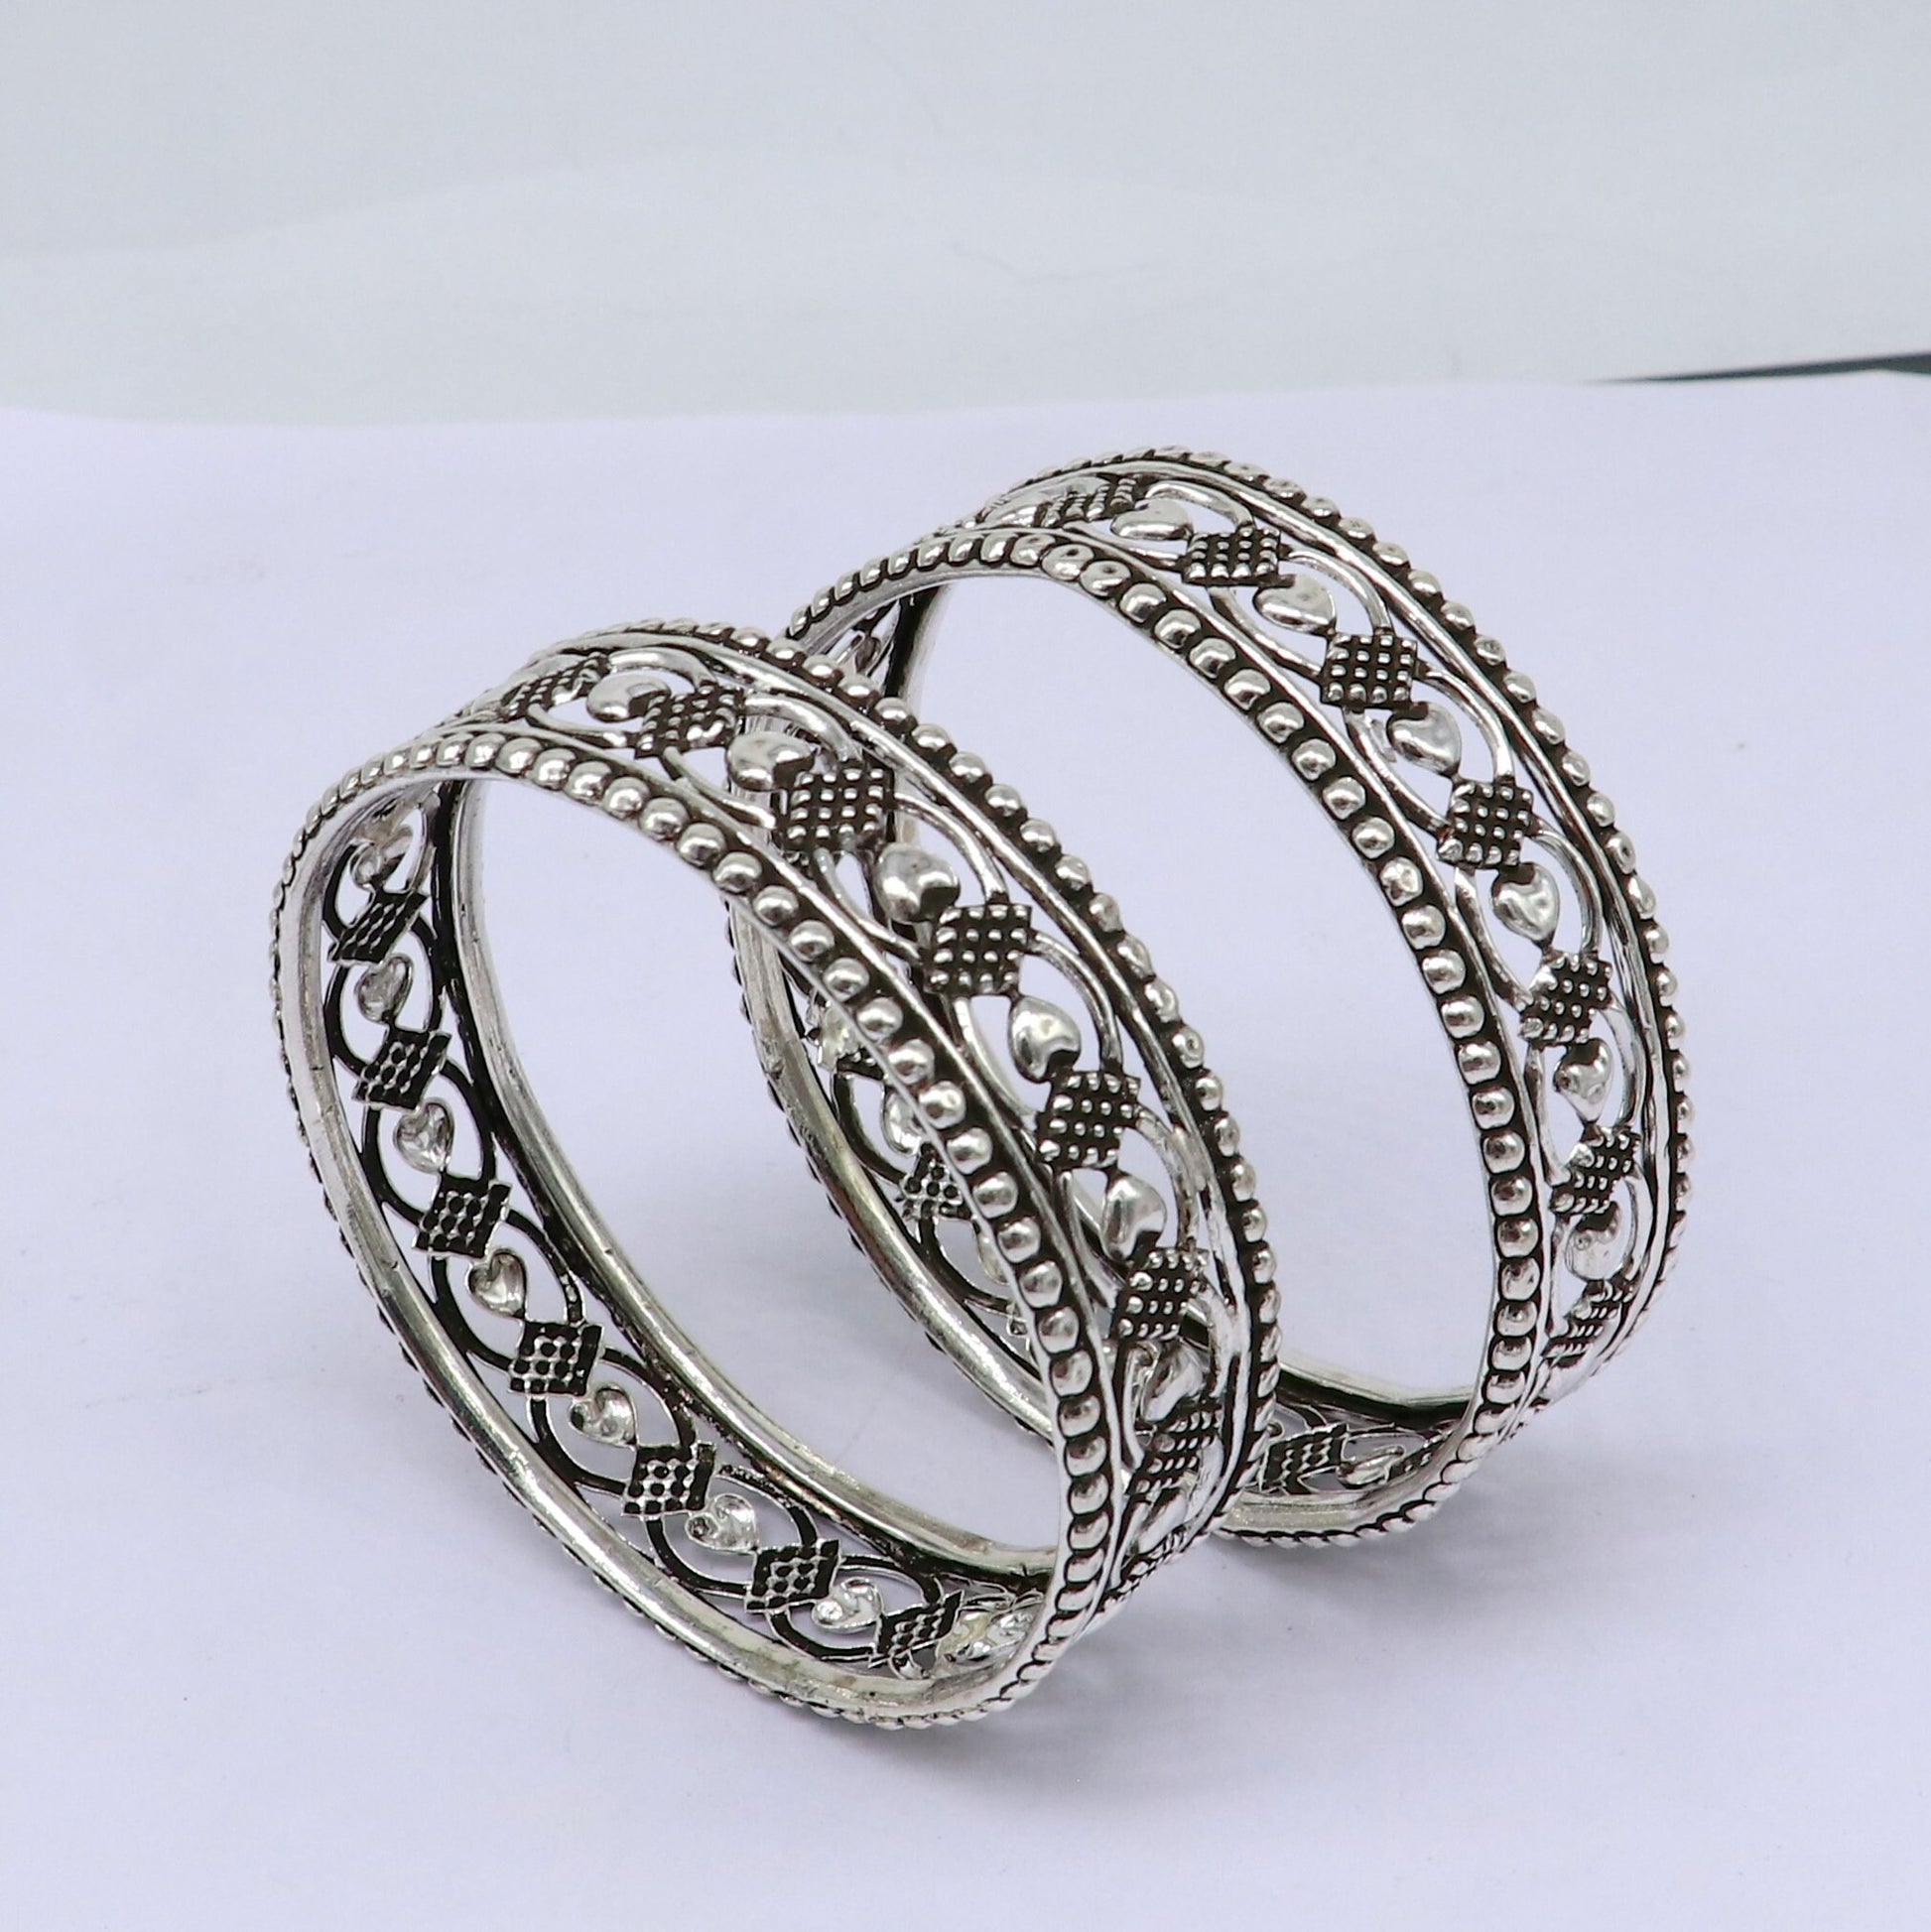 Exclusive 925 sterling silver amazing customized bangle bracelet kada , best brides gifting ethnic stylish tribal fashion jewelry nba396 - TRIBAL ORNAMENTS